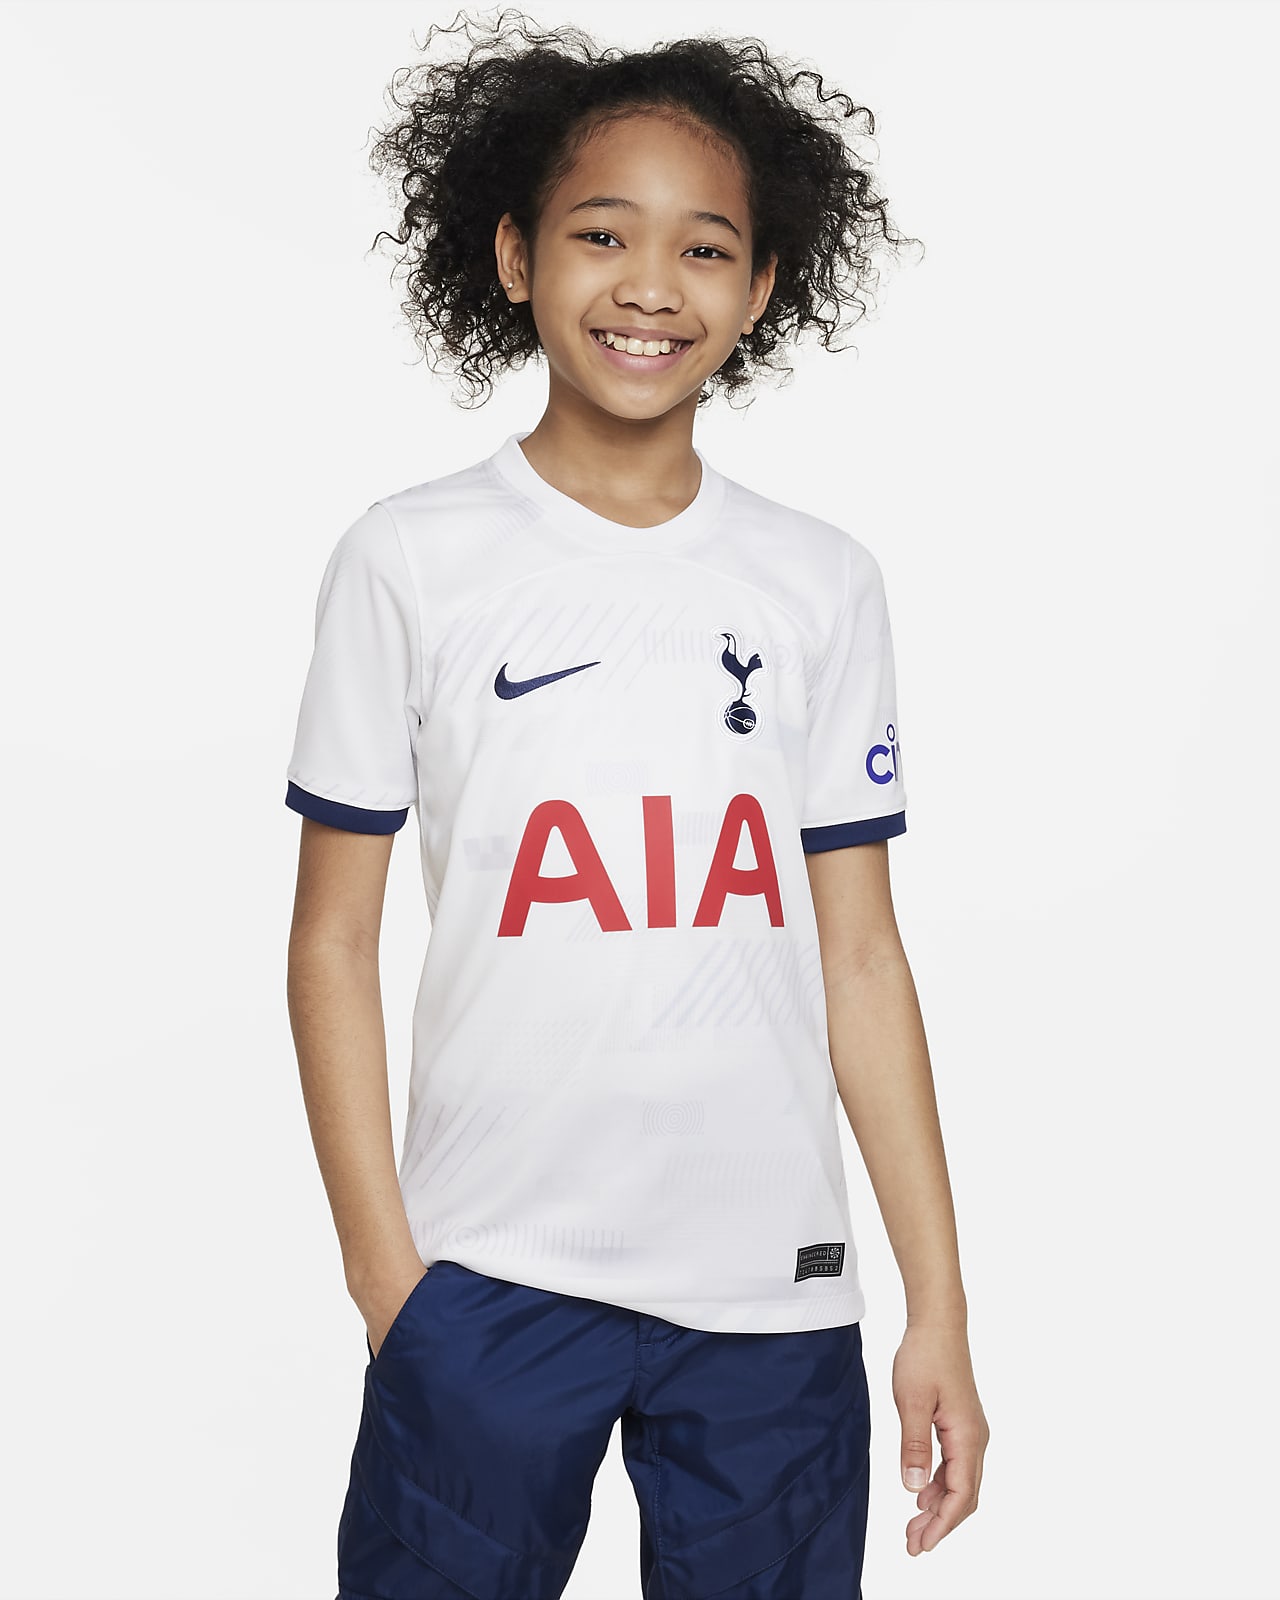 Nike Tottenham Hotspur 18-19 Away Kit Released - Footy Headlines